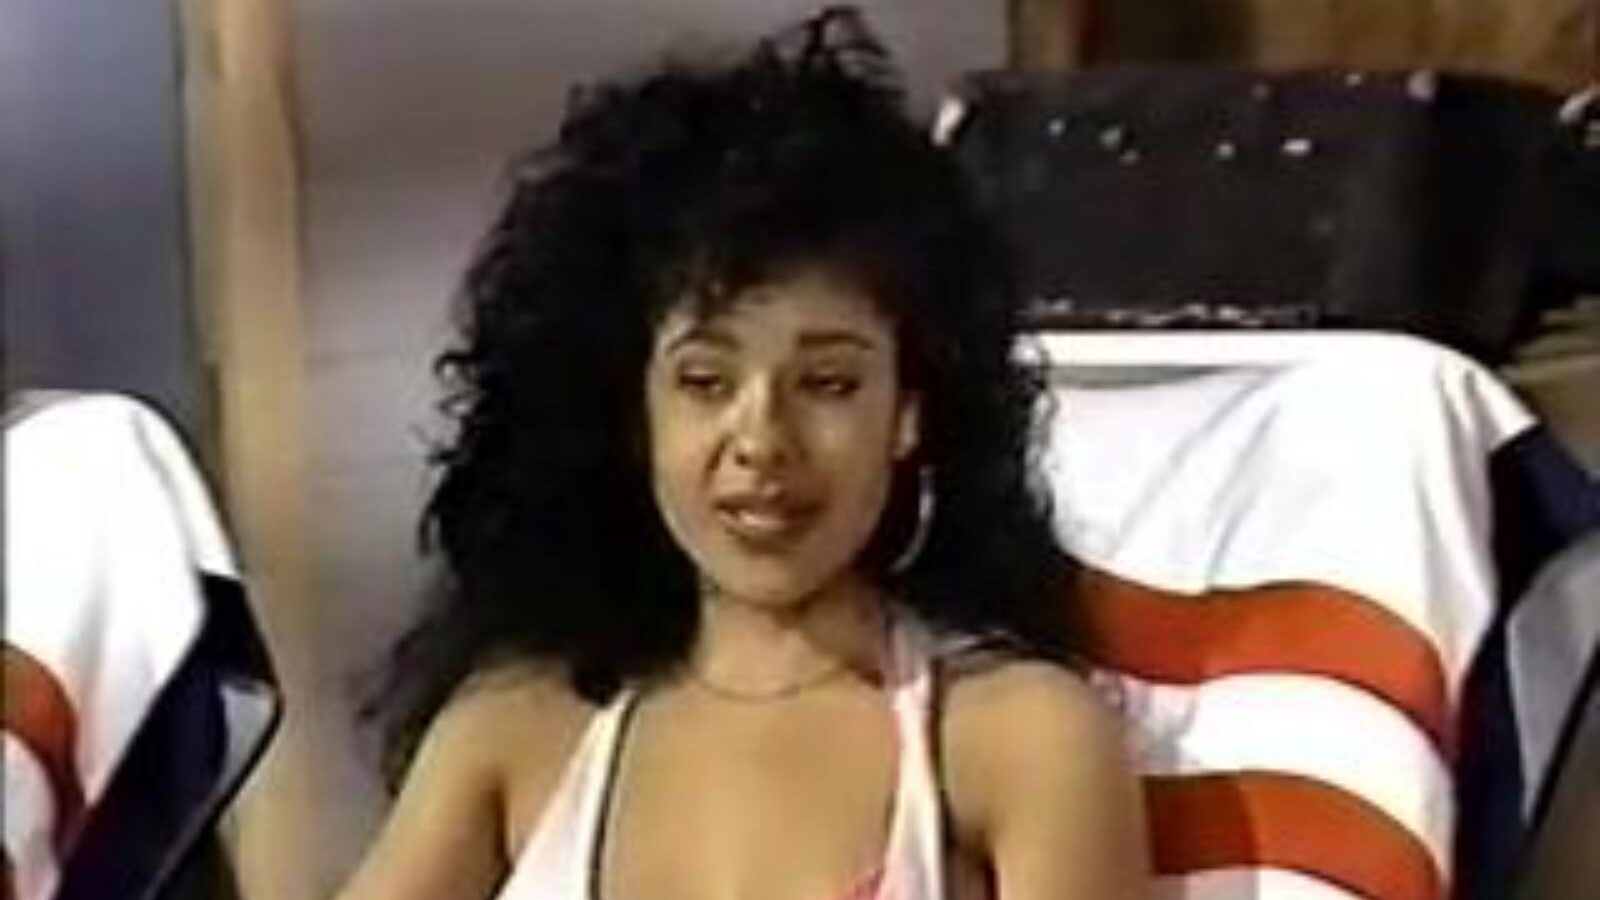 retro usa 693 90s: free 1992 porn video 0c - xhamster watch retro usa 693 90s tube hump movie σκηνή δωρεάν στο xhamster, με το πιο σέξι bevy του 1992, 90s retro, δωρεάν ΗΠΑ & ΗΠΑ δωρεάν ταινίες πορνογραφίας